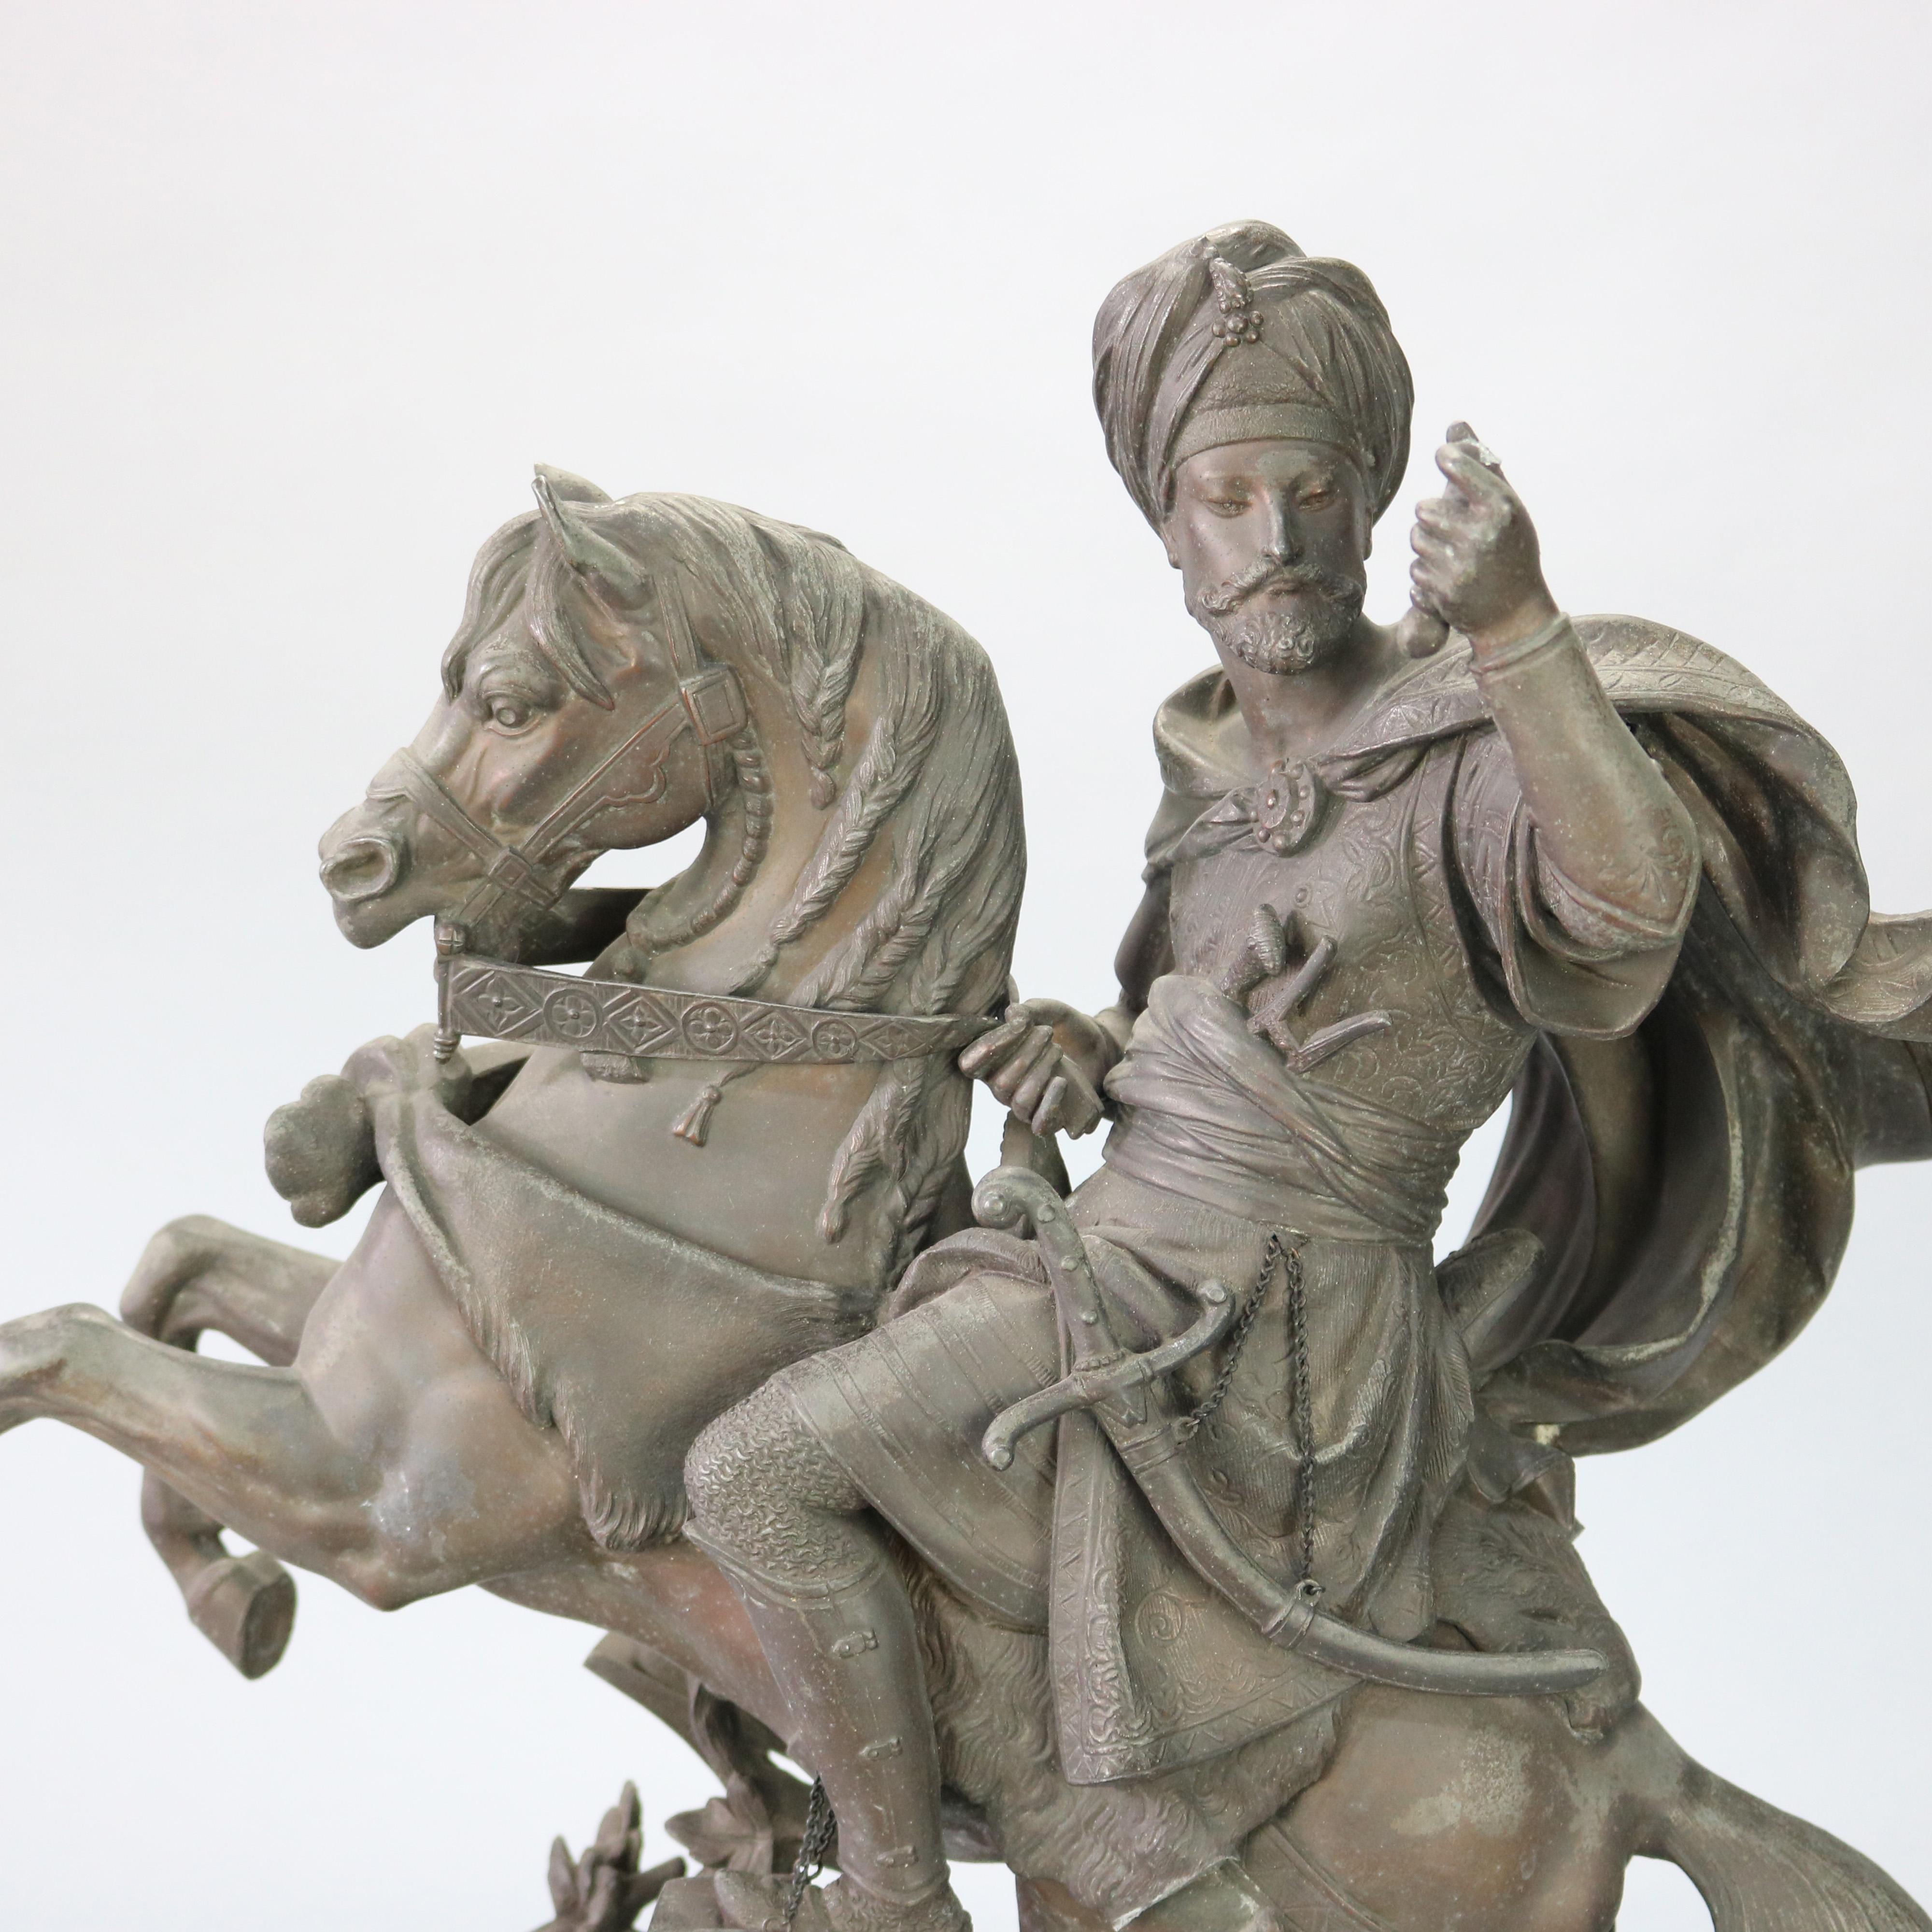 An antique Moorish bronzed cast metal sculpture depicts Haroun Al Rashid on horseback, signed A. Carrier on wood plinth, 19th century

Measures: 24